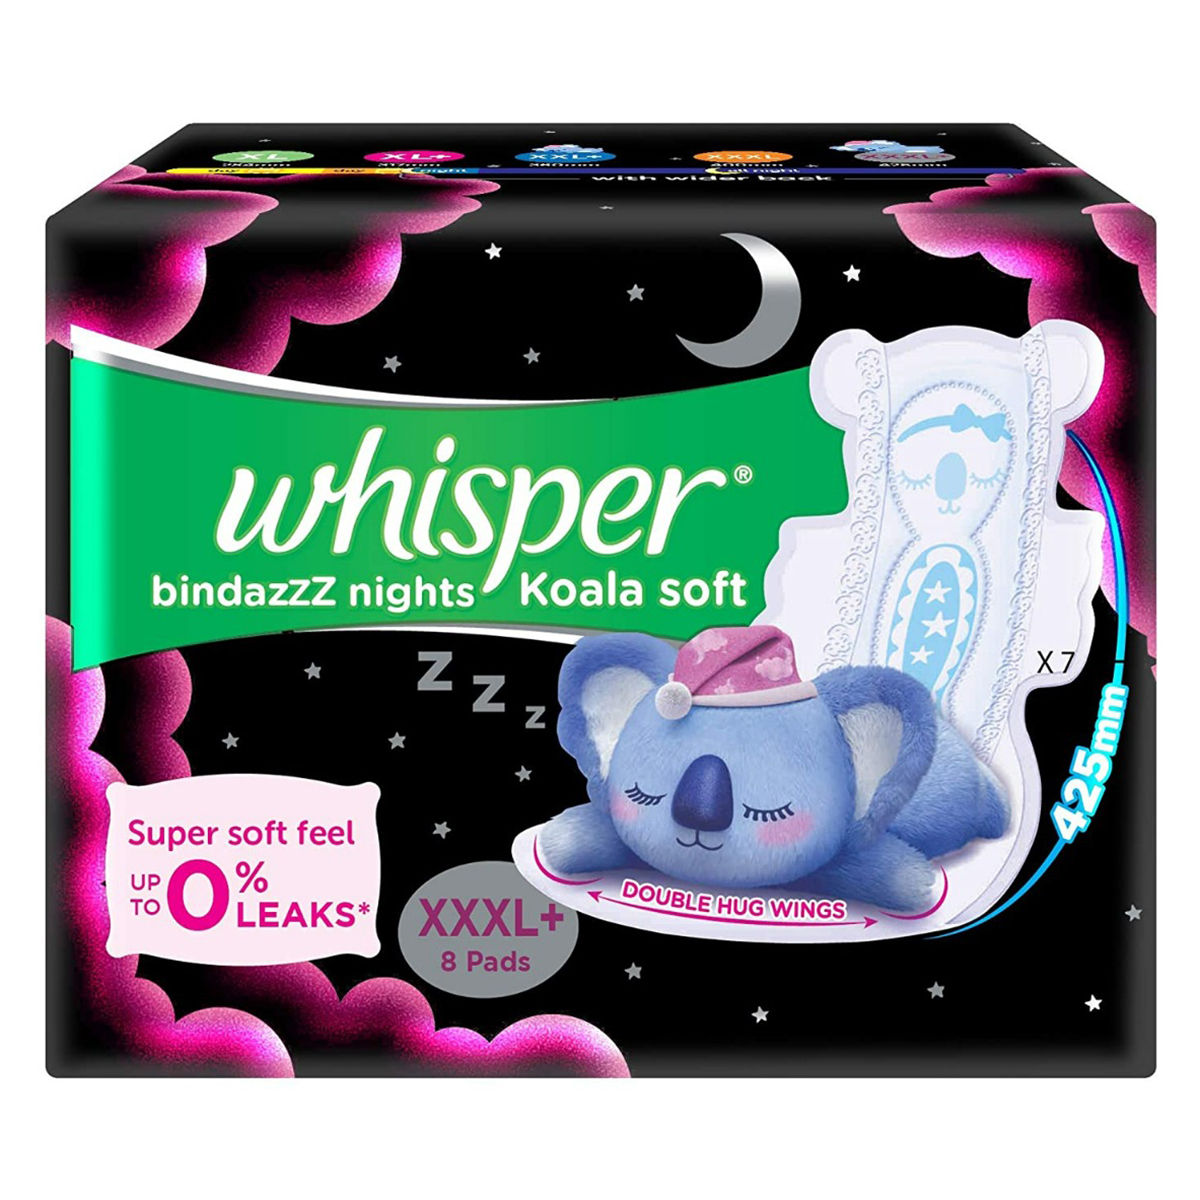 Buy Whisper Bindazzz Nights Koala Soft Sanitary Pads XXXL+, 8 Count Online